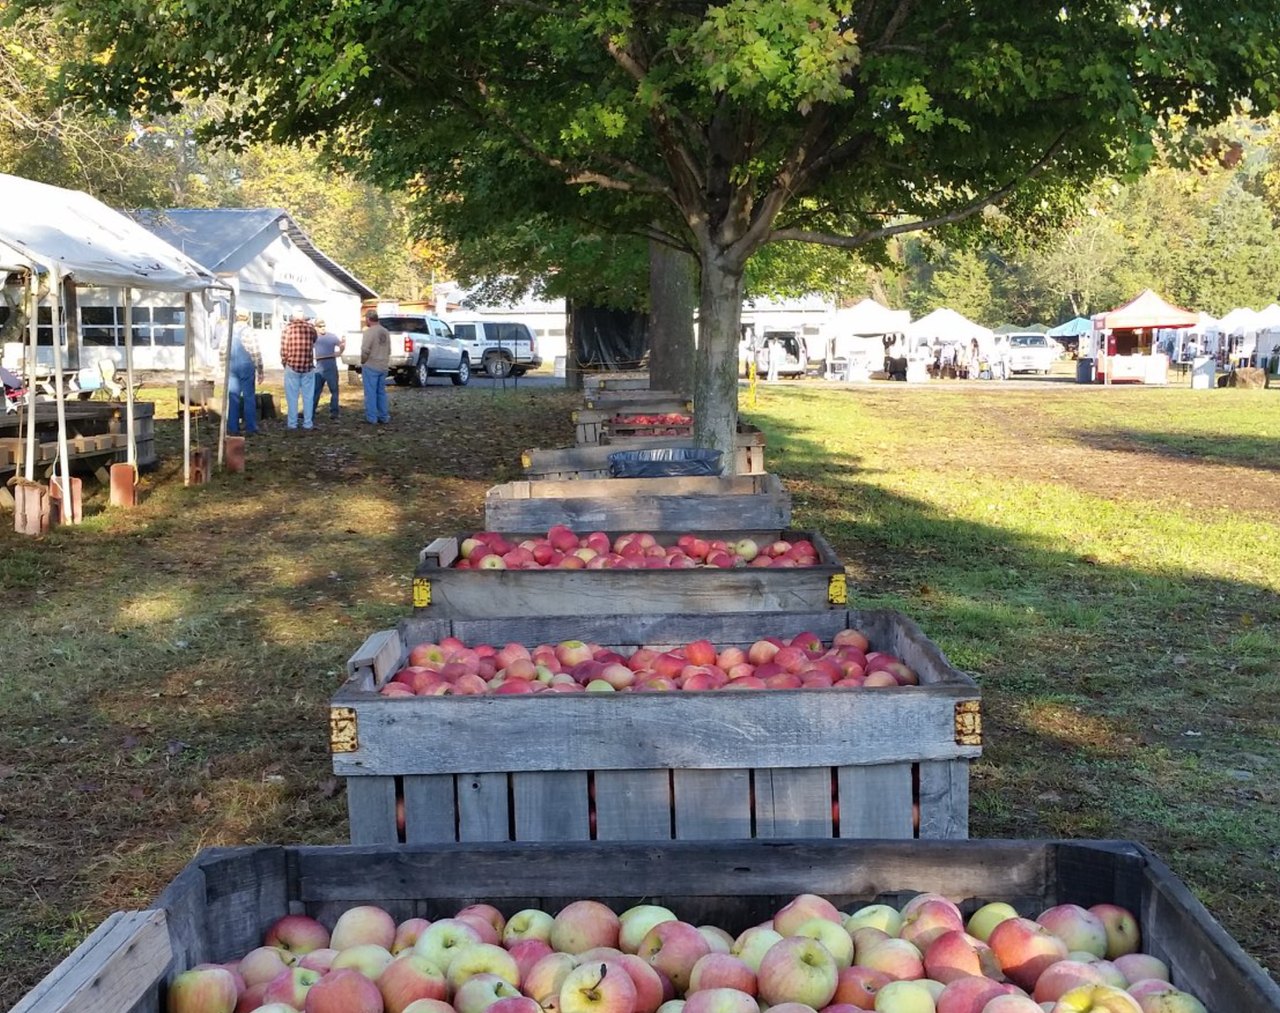 Graves Mountain Apple Festival One Of The Best Fall Festivals In Virginia